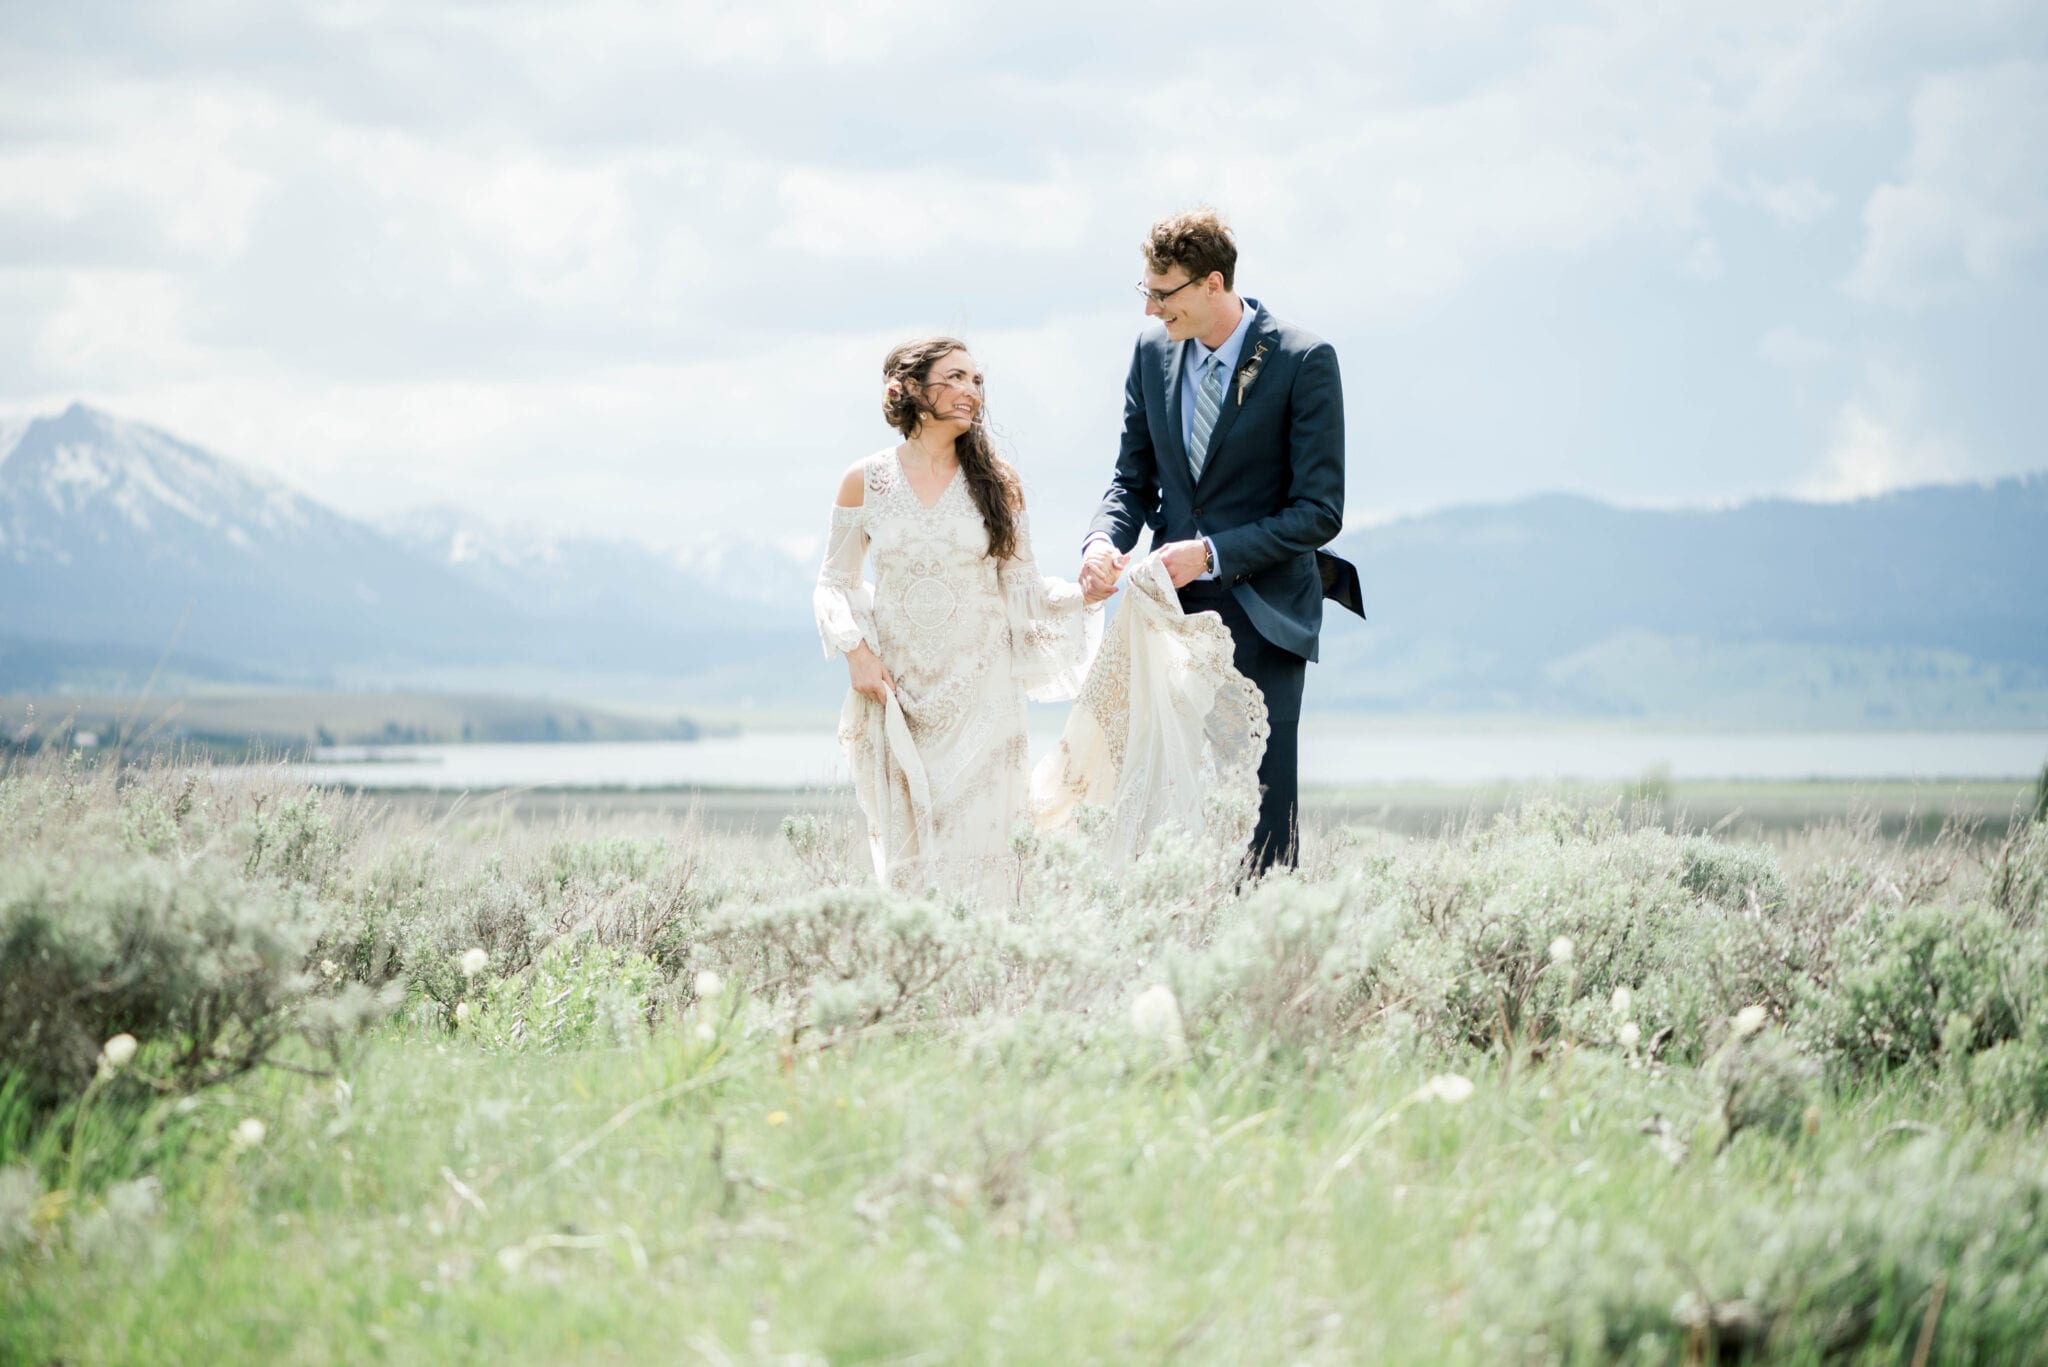 KA.BrideandGroom 193 - Karrie + Alex Poortinga - West Yellowstone Wedding